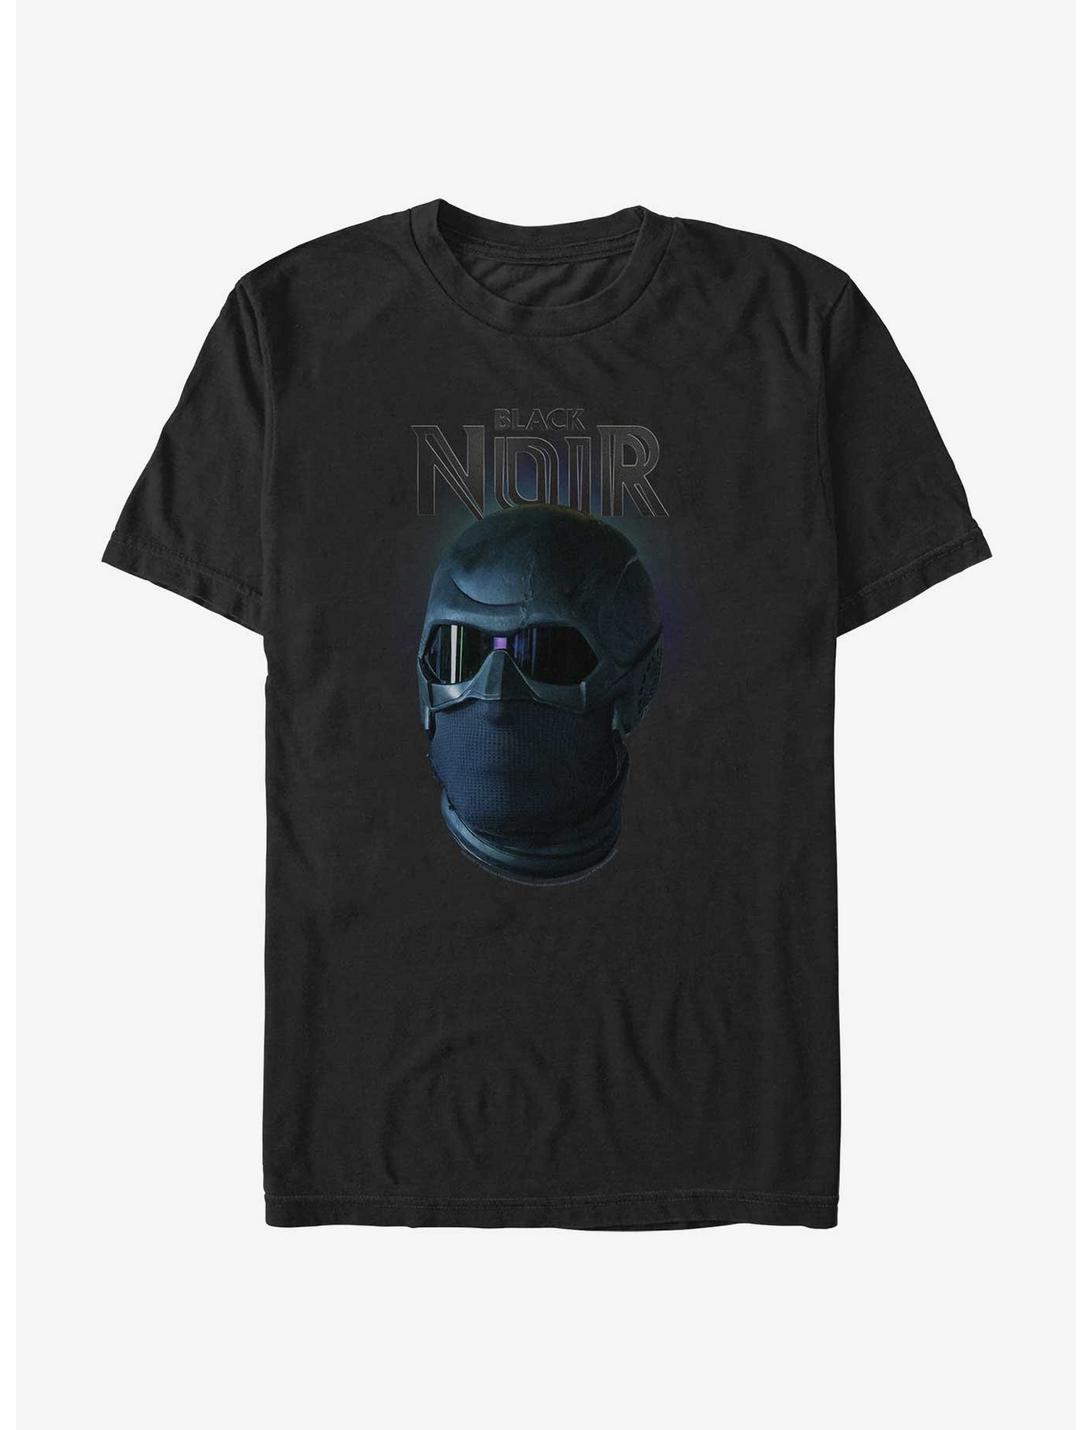 The Boys Black Noir T-Shirt, BLACK, hi-res